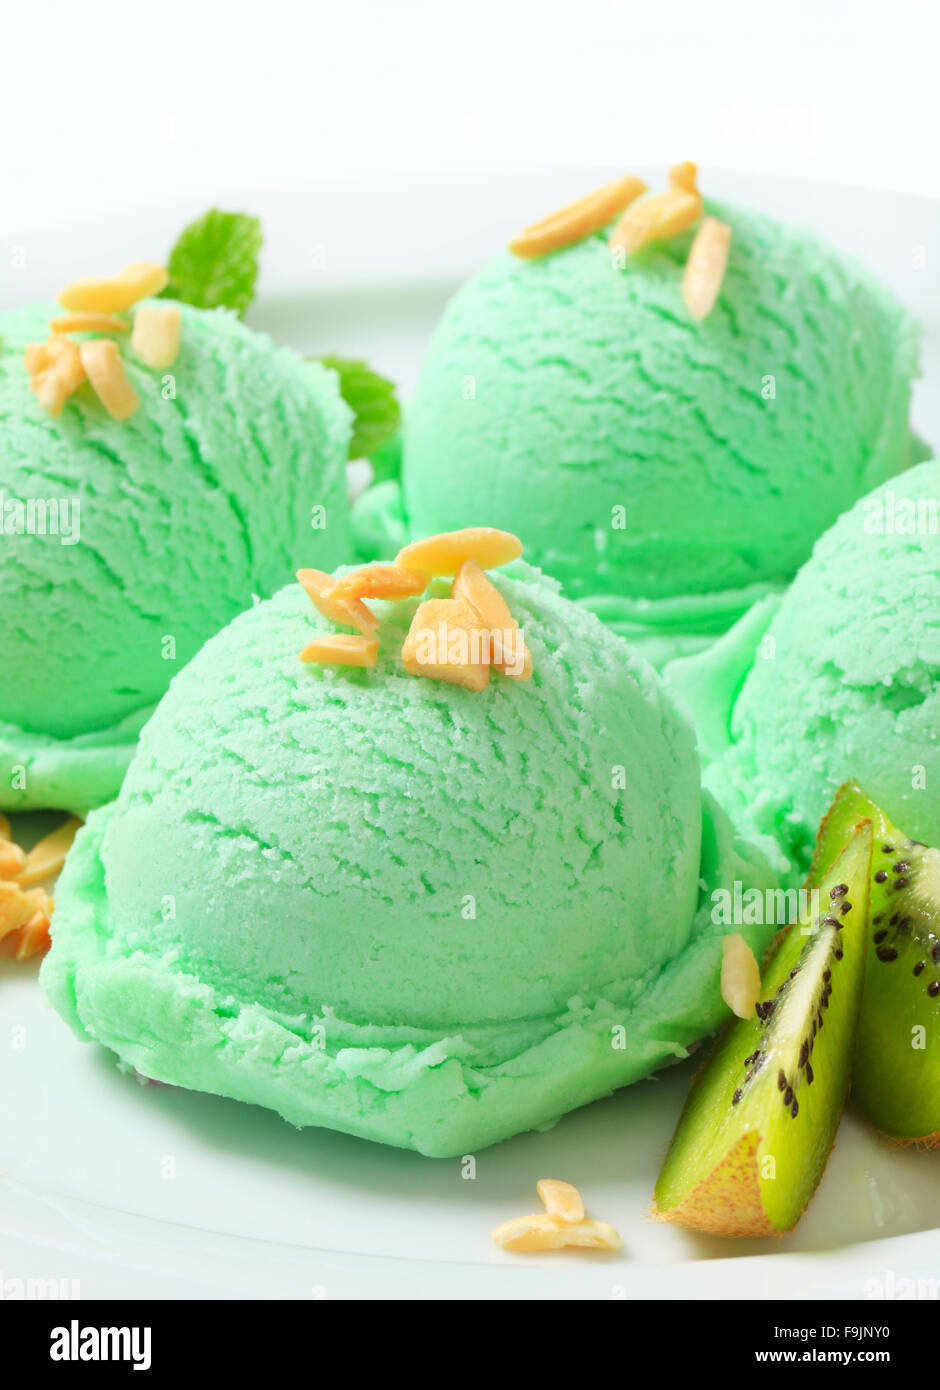 Scoops of light green ice cream Stock Photo